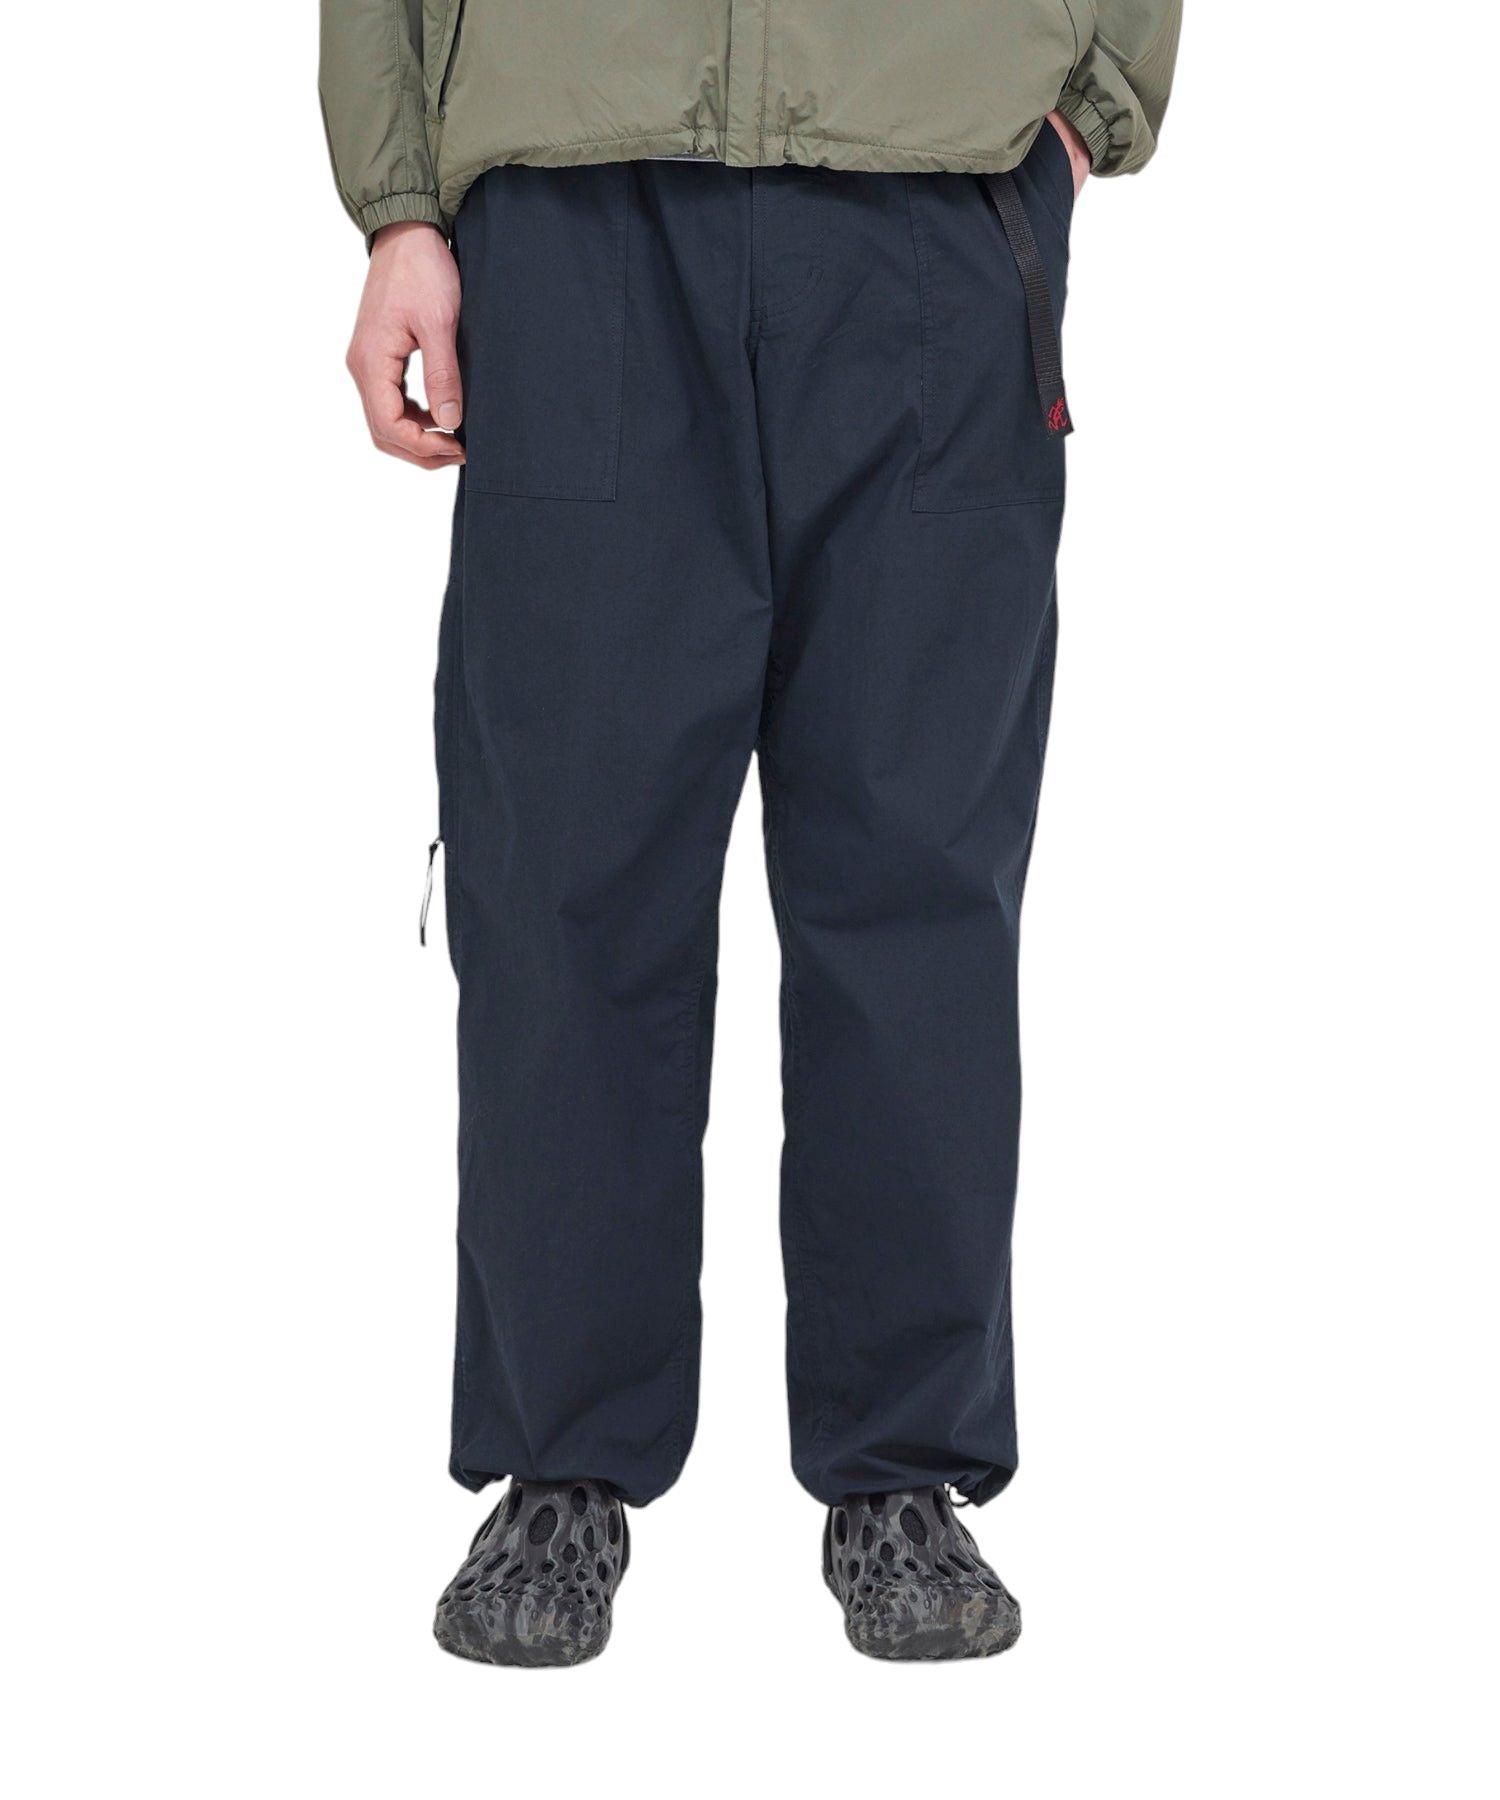 Pantaloni Weather Fatigue Uomo Navy